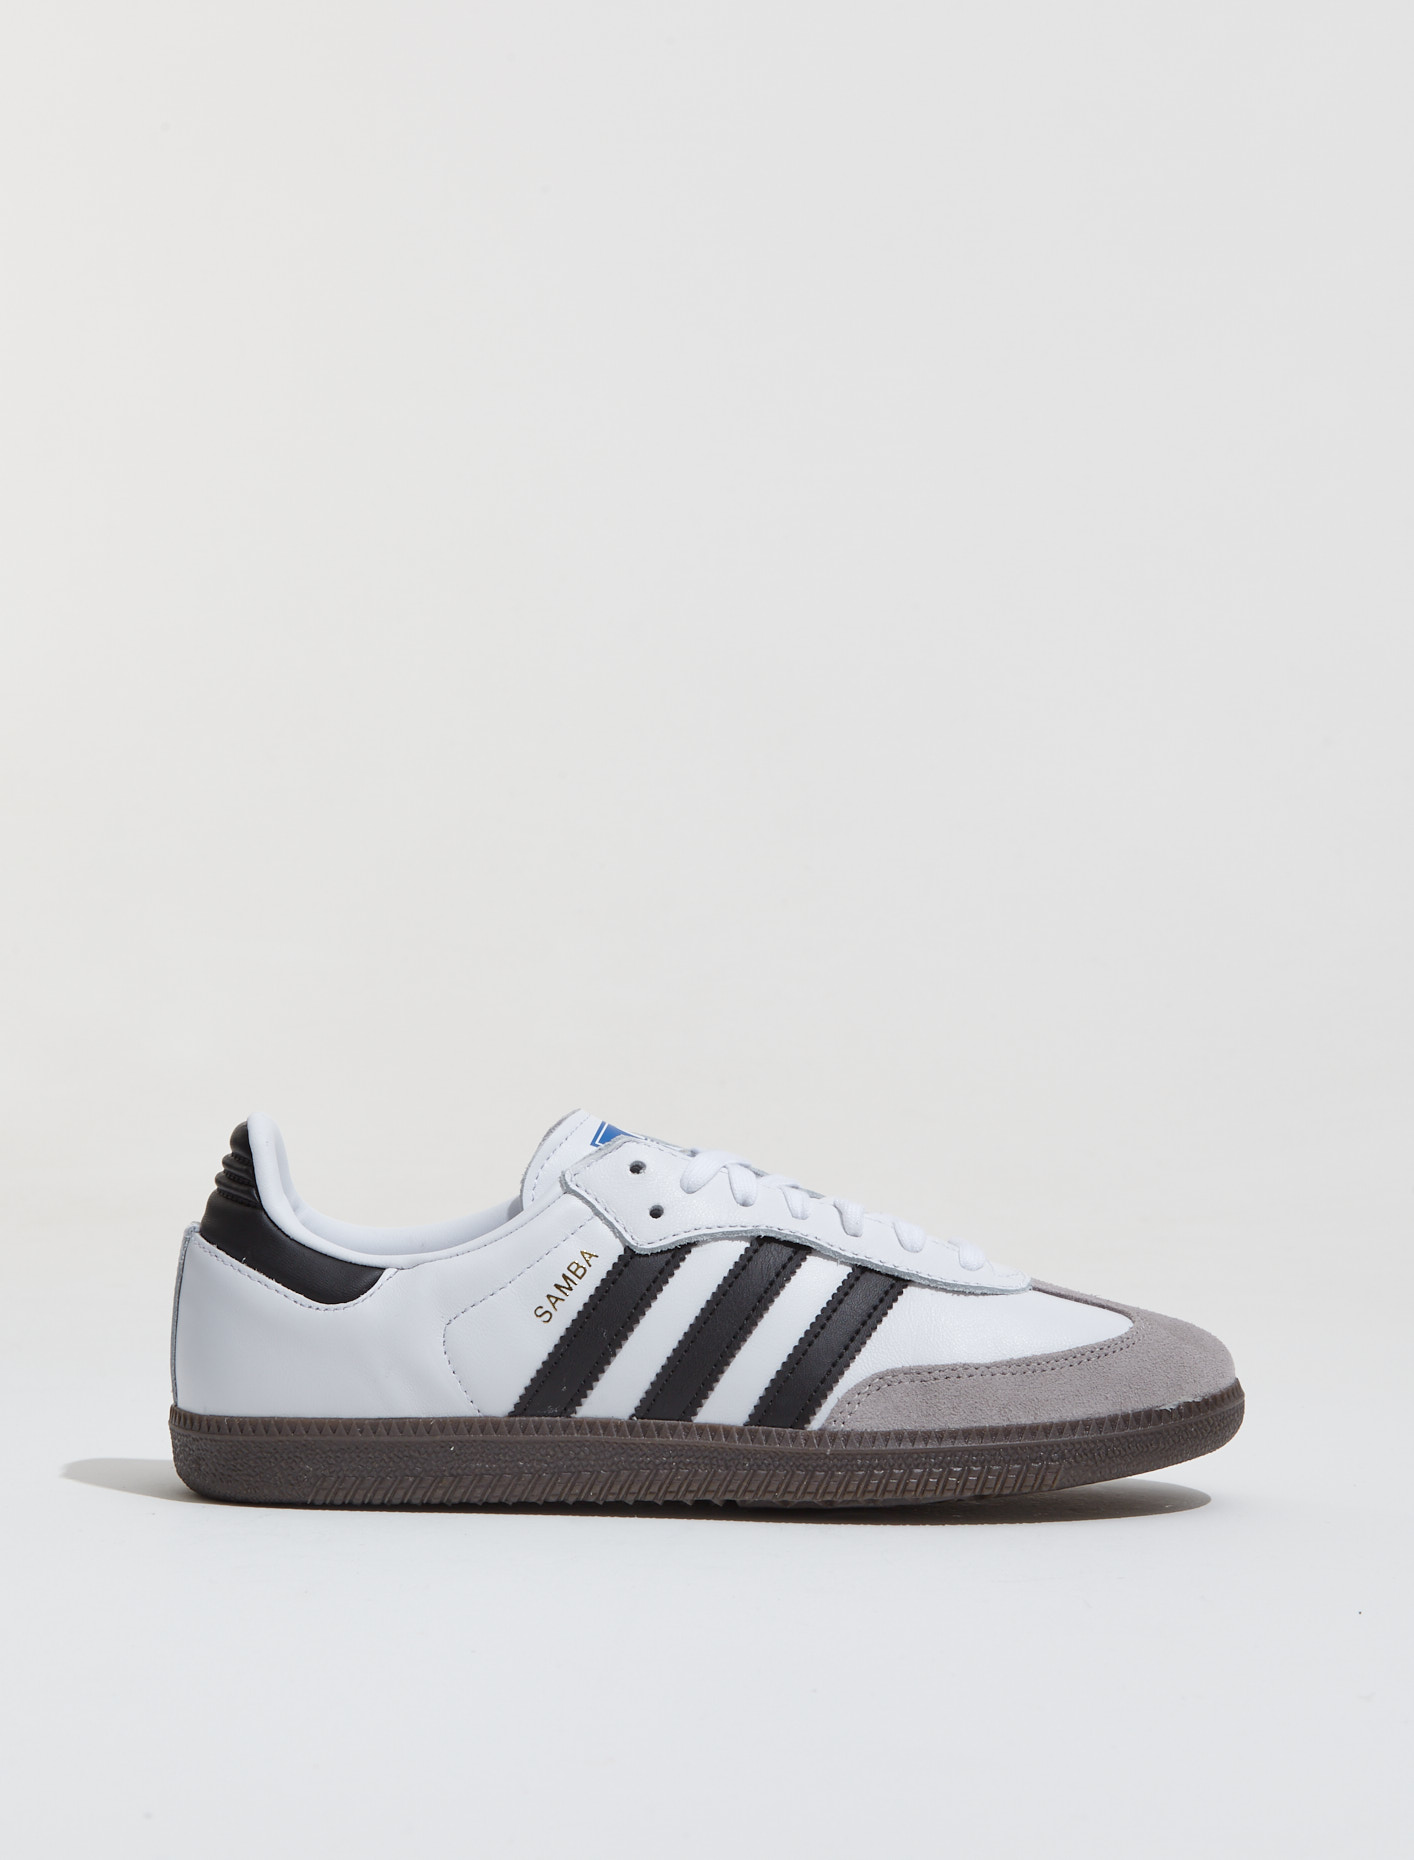 Adidas Samba OG Sneaker in White | Voo Store Berlin | Worldwide Shipping